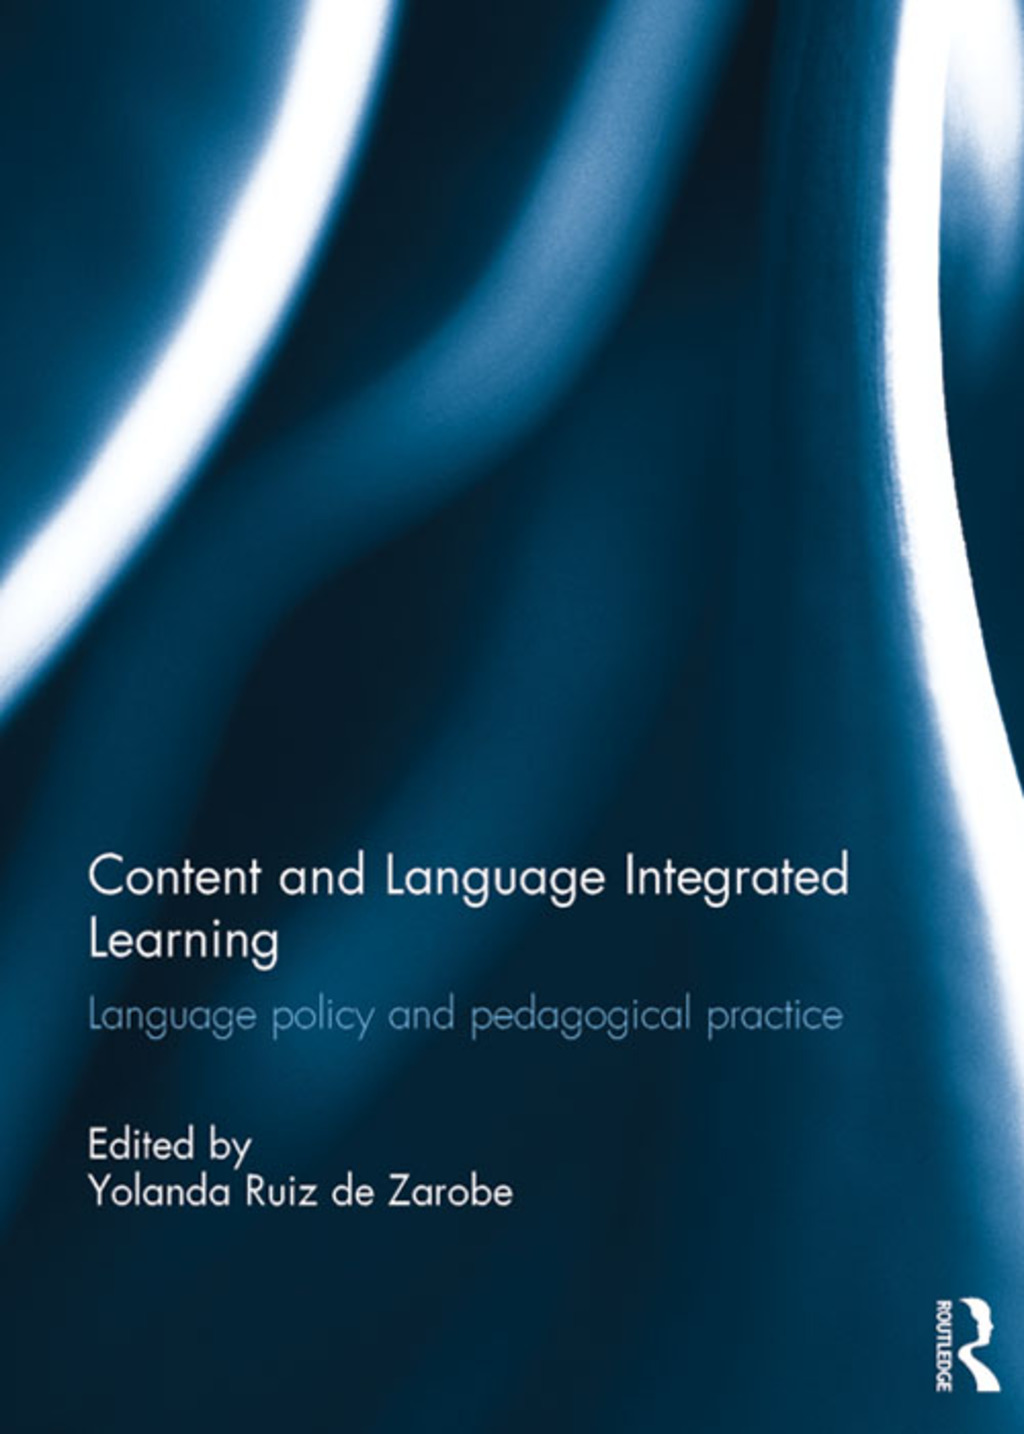 Content and Language Integrated Learning (eBook) - Yolanda Ruiz de Zarobe